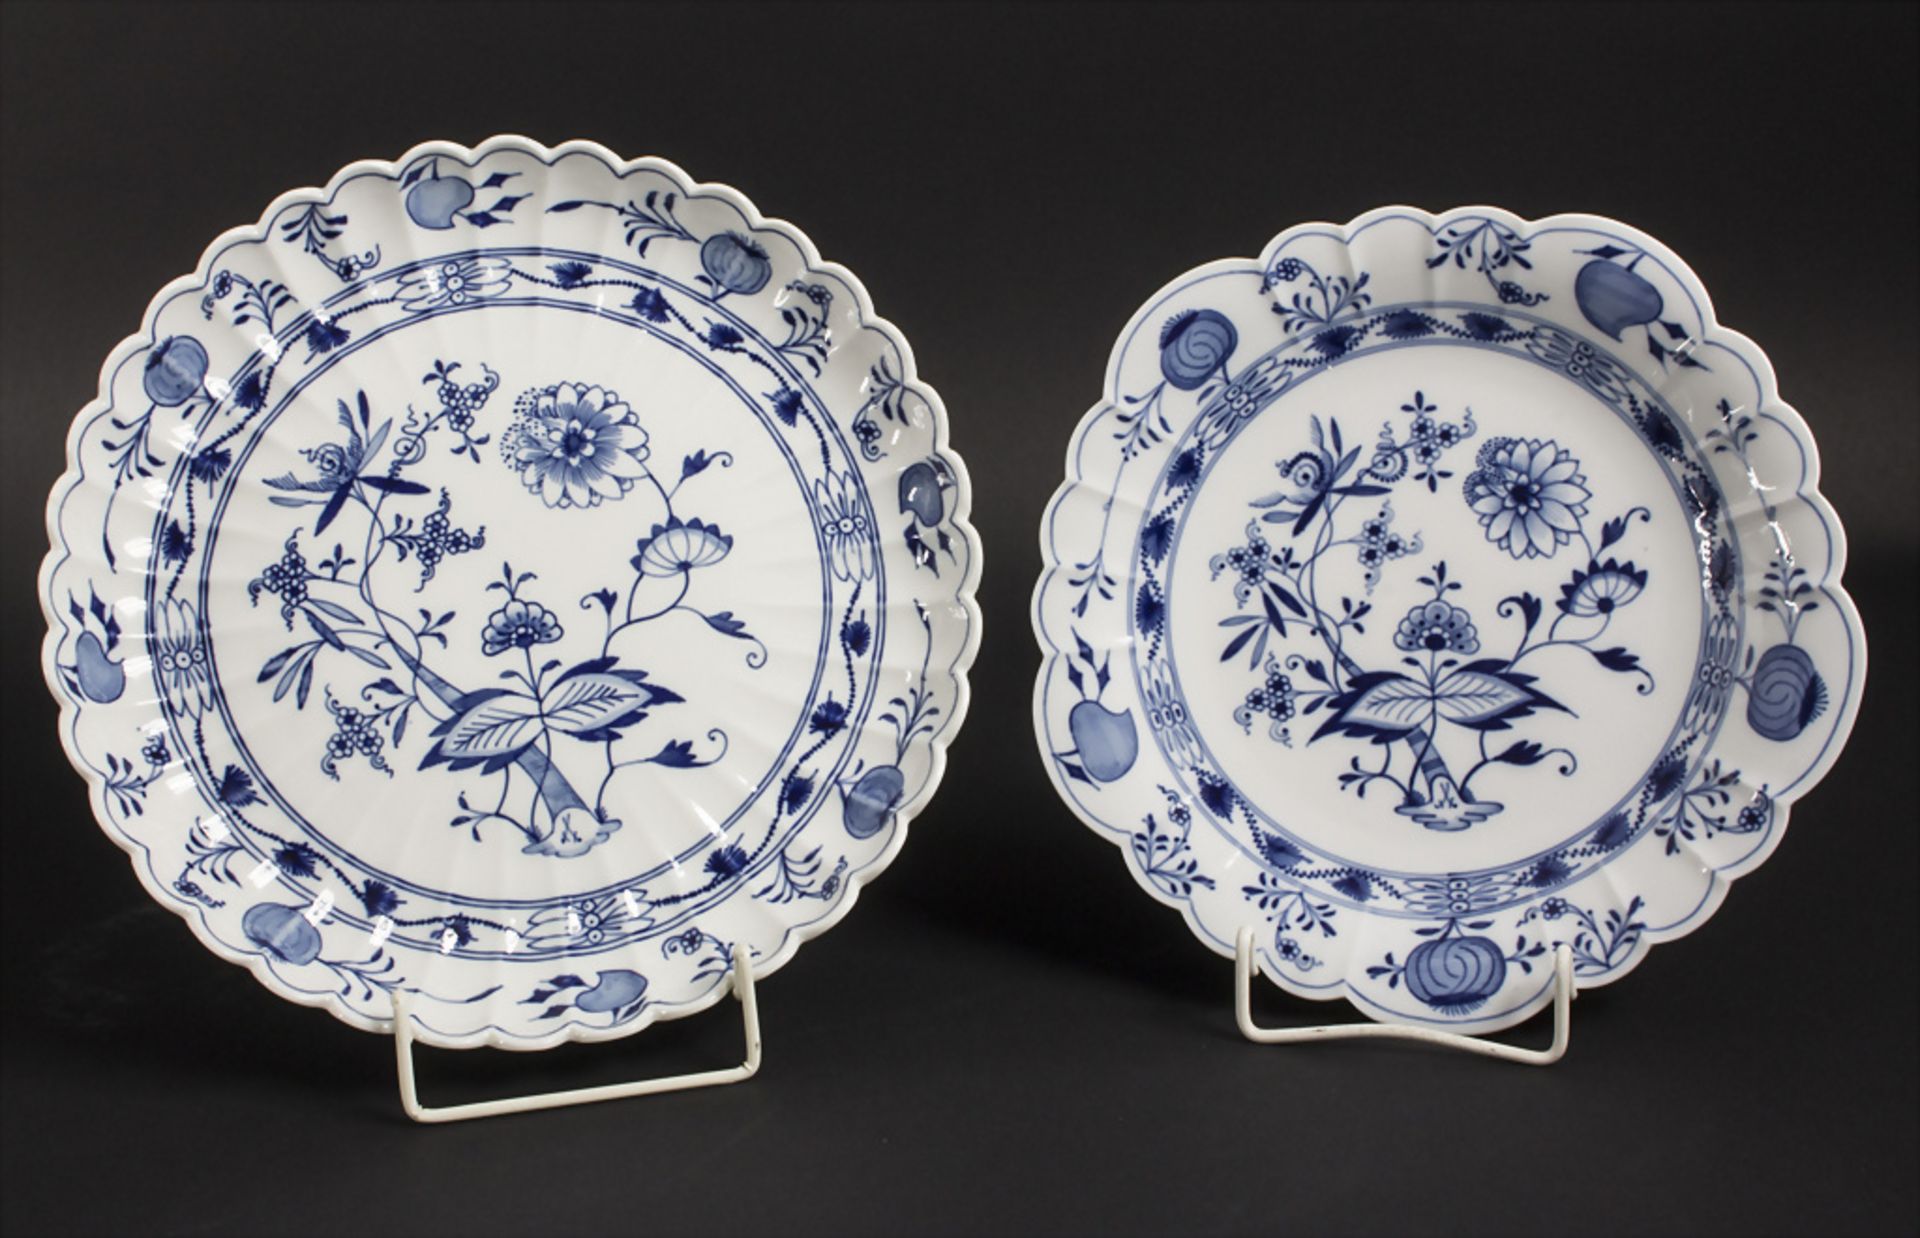 Zwei Zwiebelmuster Servierteller / Two onion pattern serving plates, Meissen, 19. Jh.